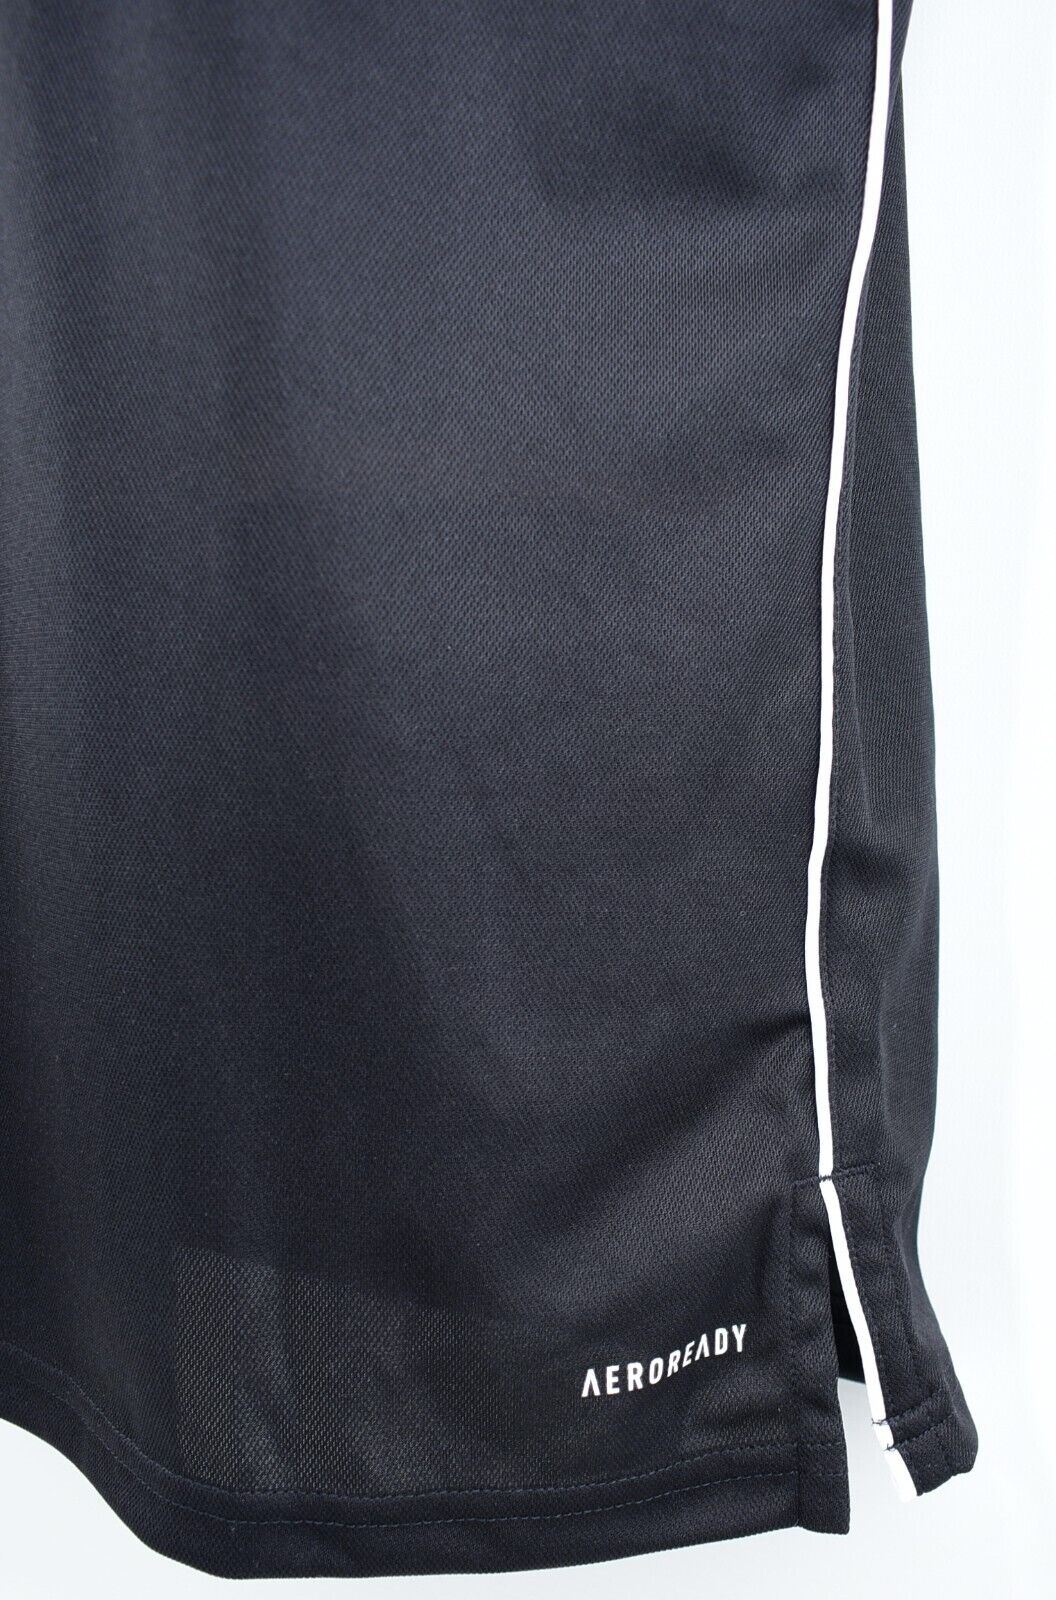 ADIDAS Mens Core 18 Performance Polo Shirt, T-shirt, Black, size L